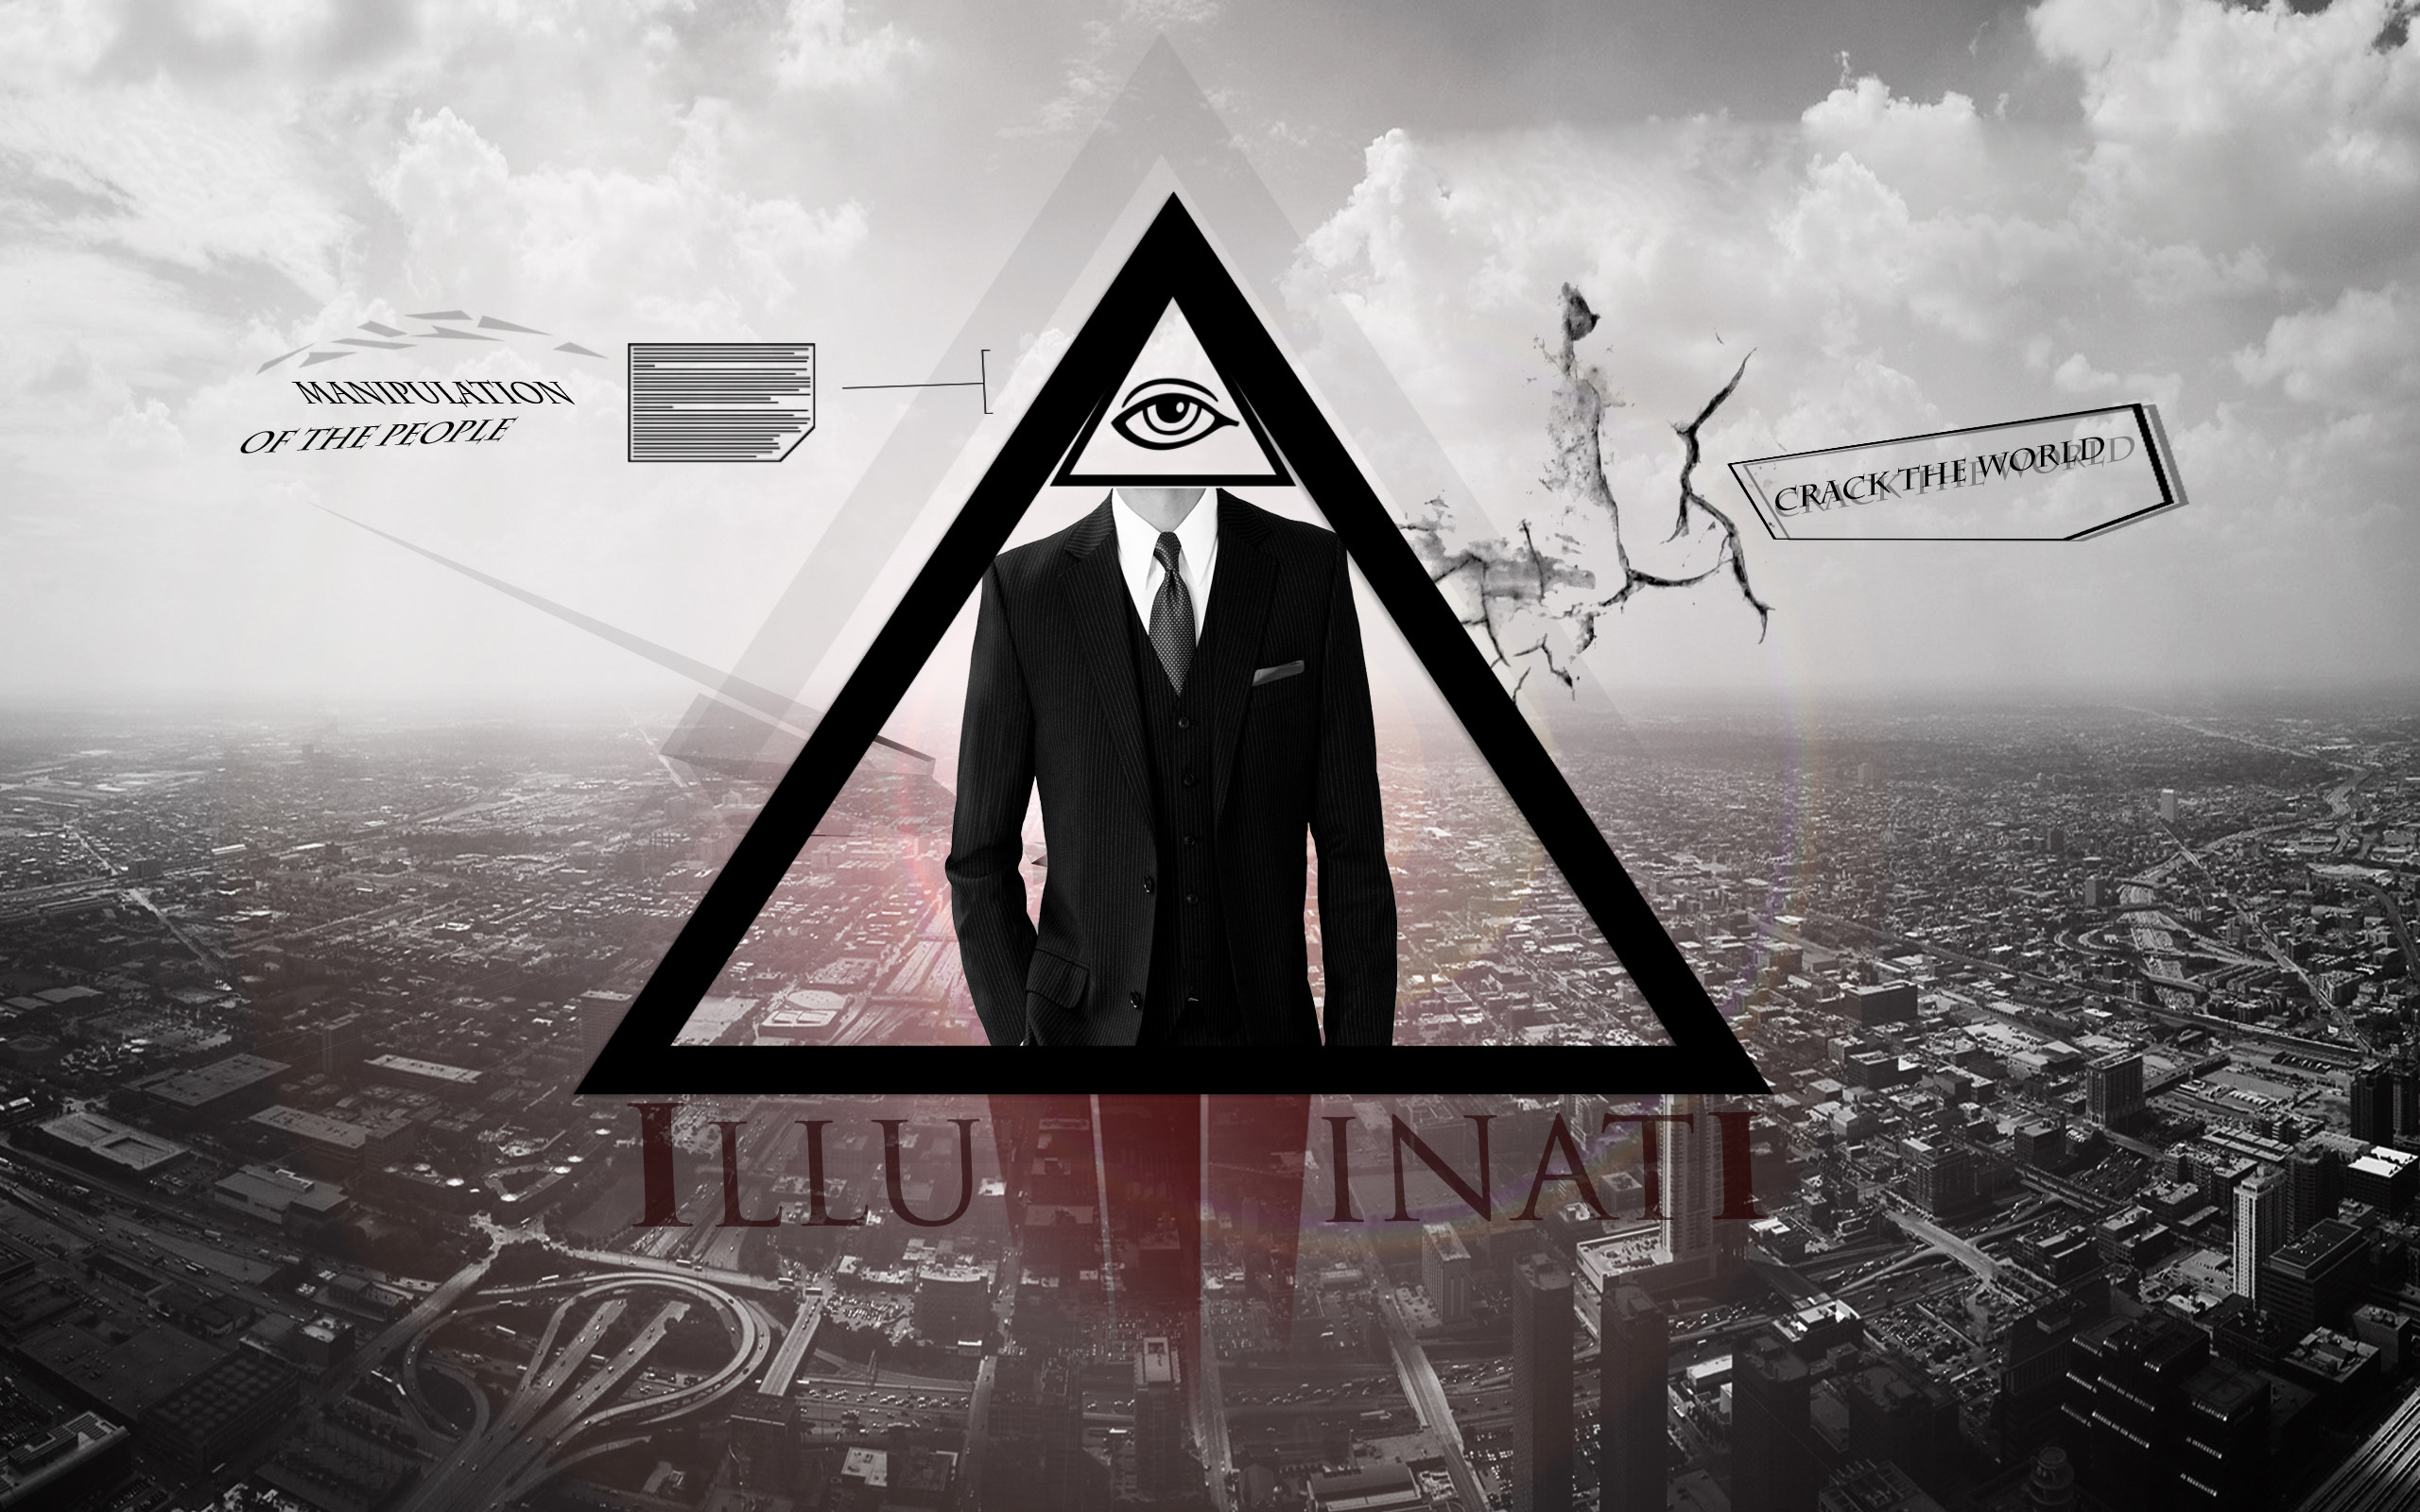 Probably illuminati by XxDannehxX on DeviantArt